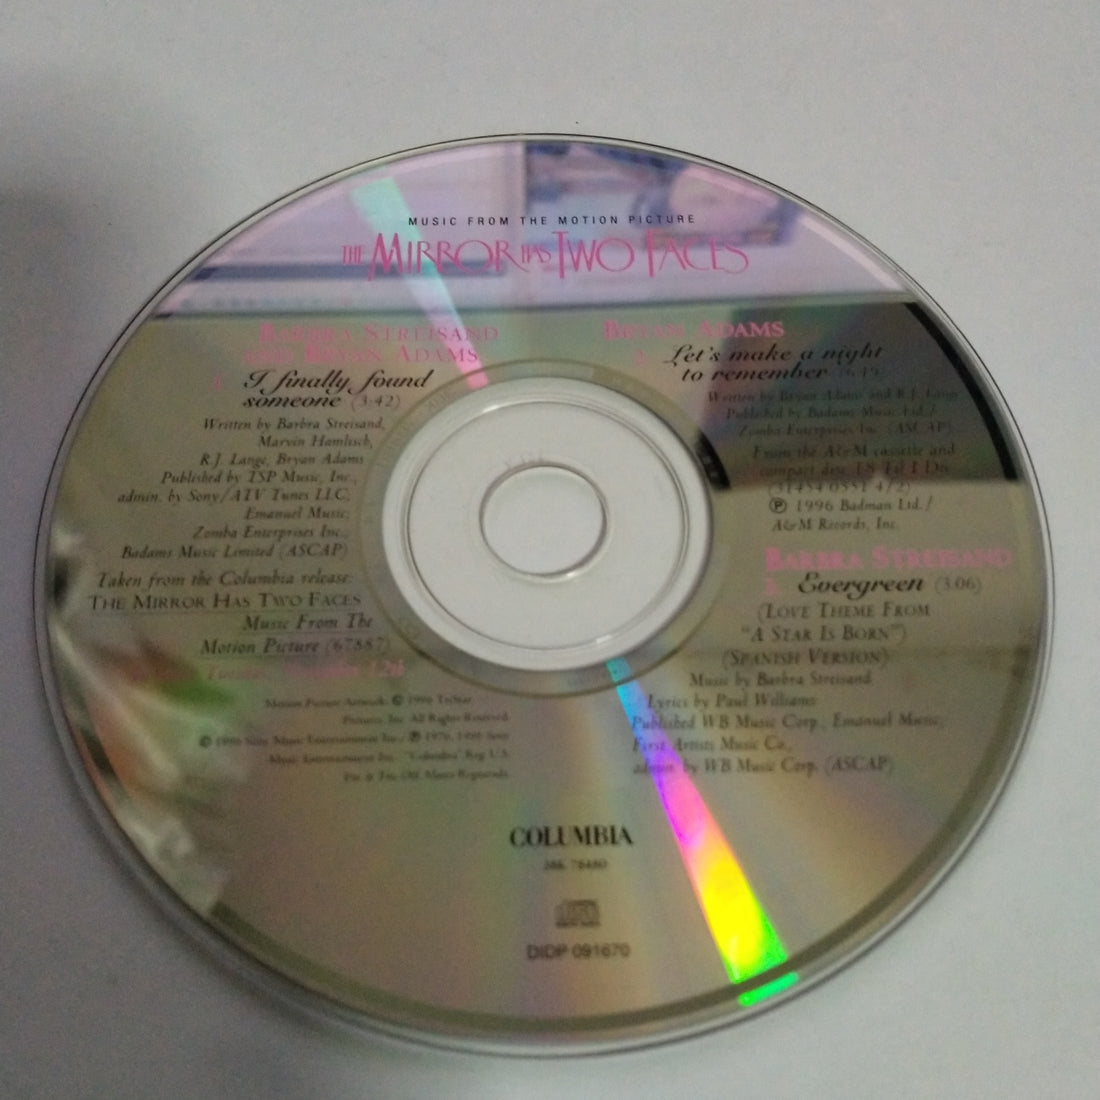 Barbra Streisand And Bryan Adams – I Finally Found Someone (CD)(VG+)